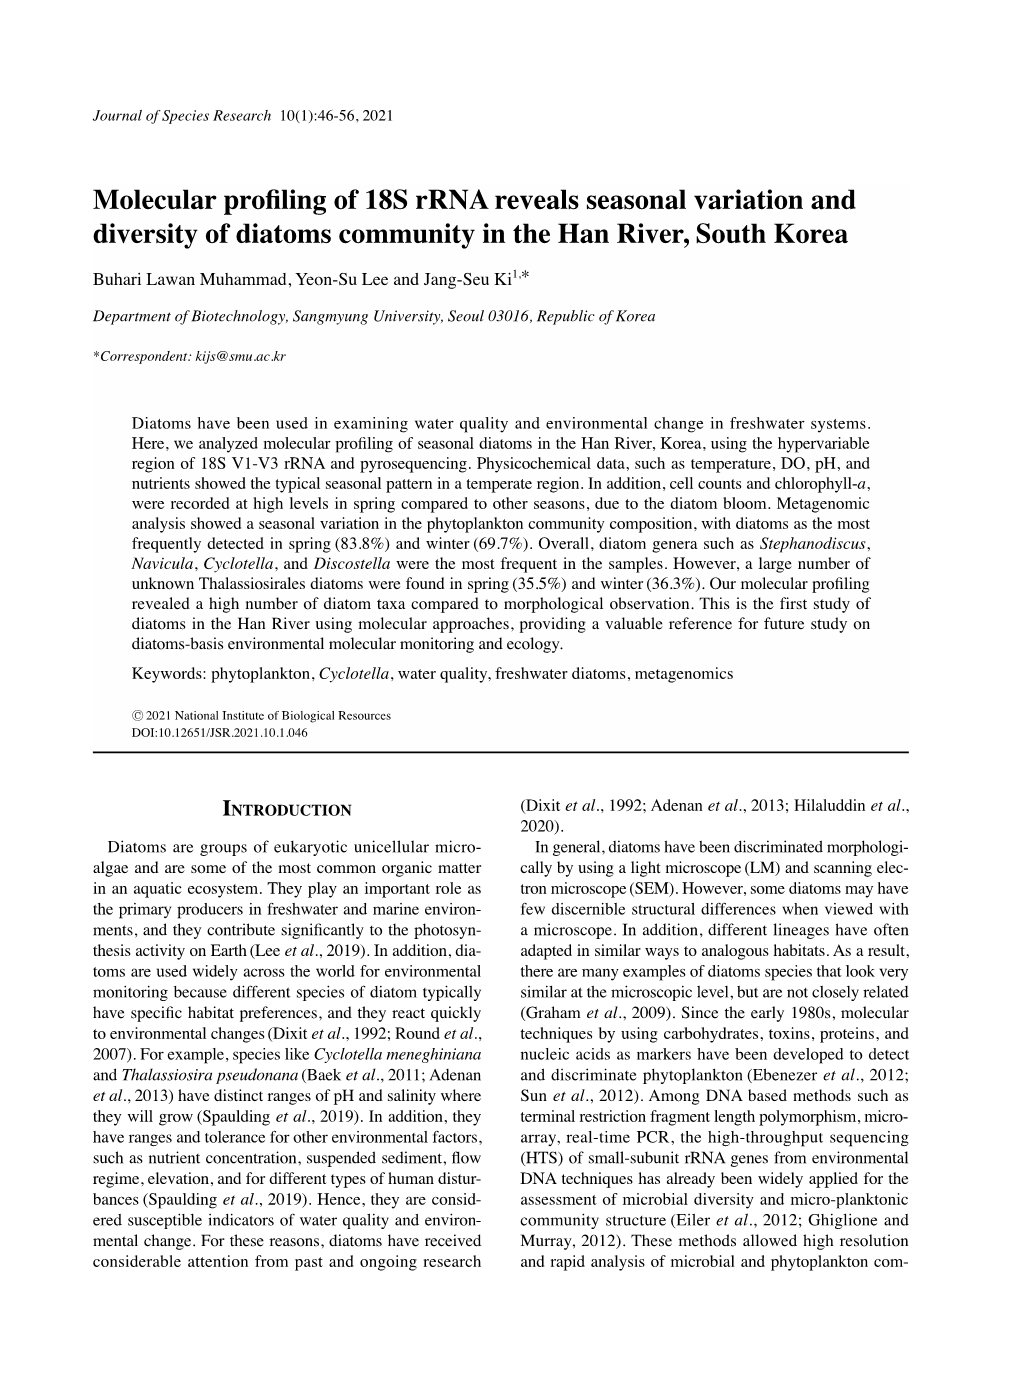 Molecular Profiling of 18S Rrna Reveals Seasonal Variation and Diversity of Diatoms Community in the Han River, South Korea